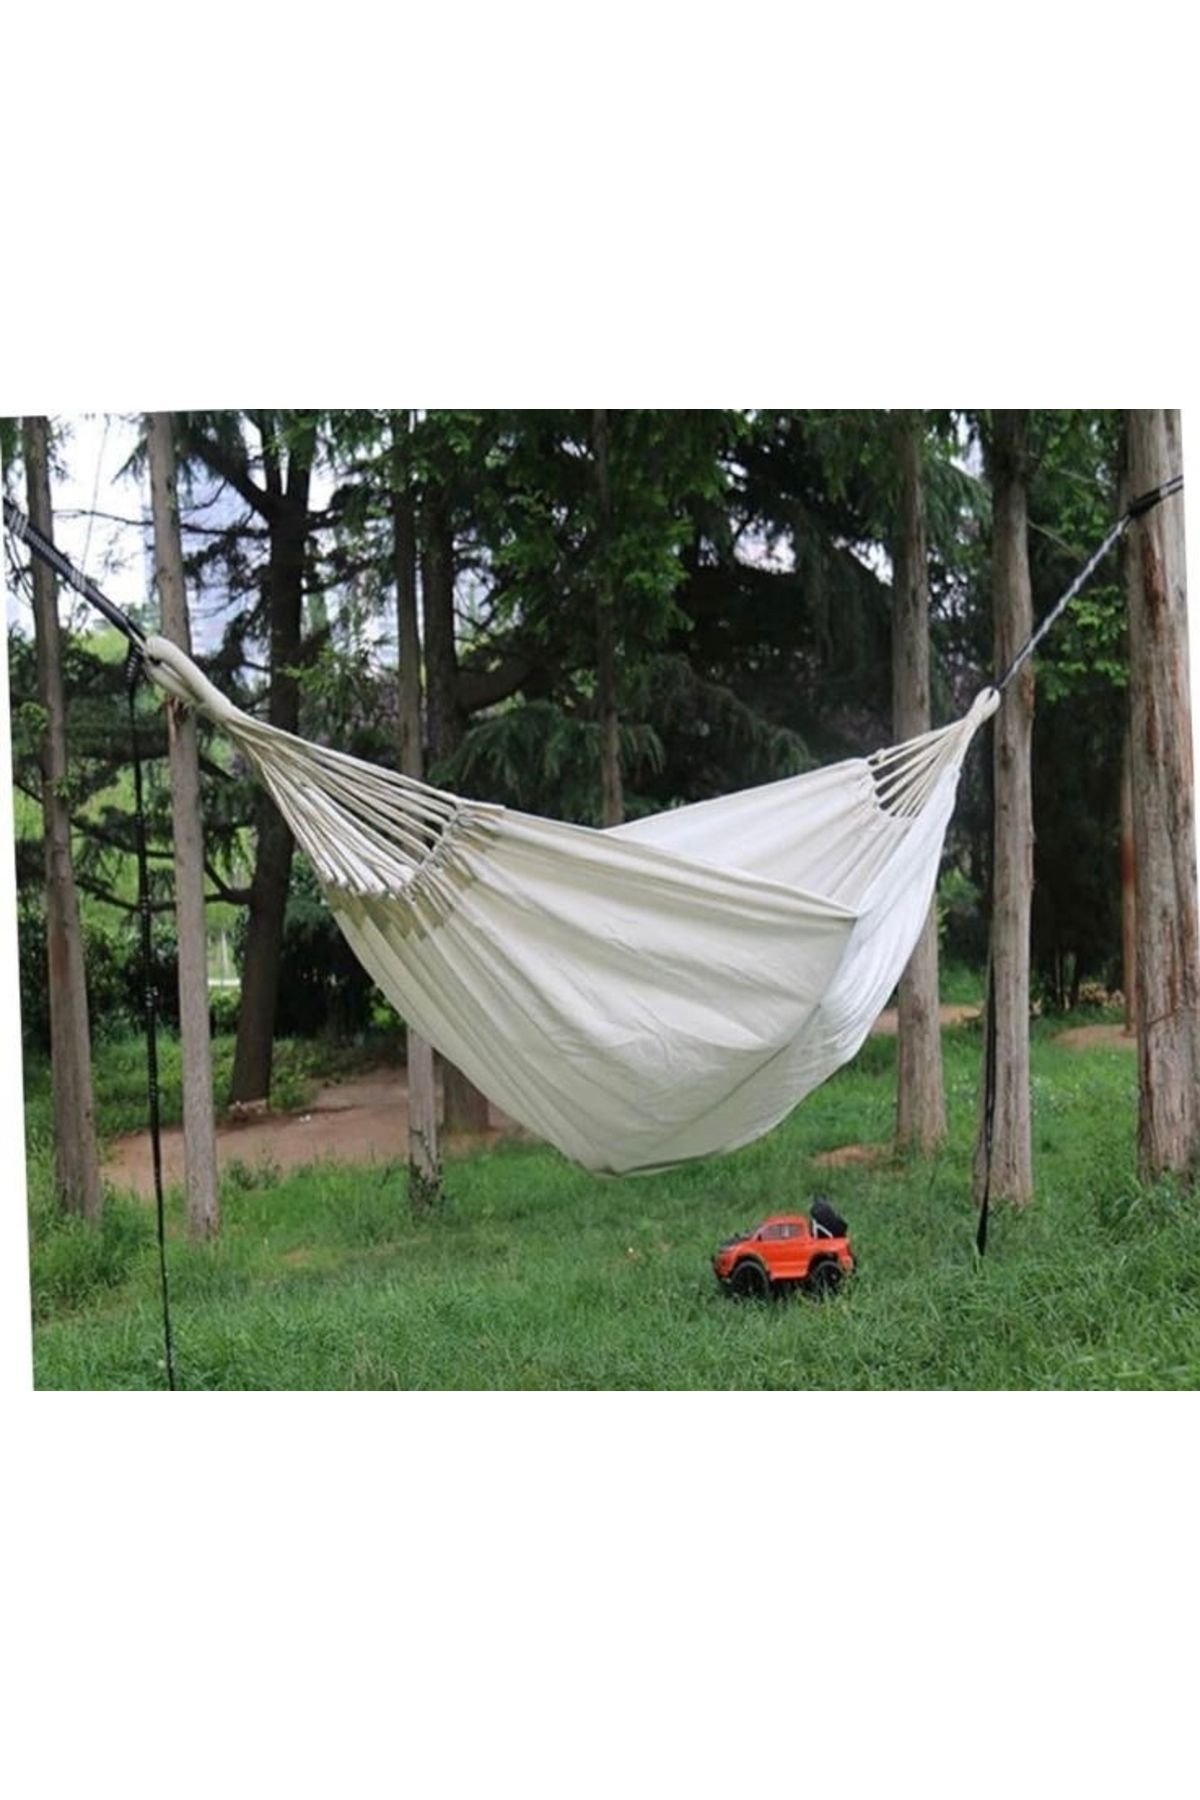 relax ipek hamak RELAX İPEK HAMAK- KAMP HAMAK BEYAZ kamp-piknik-bahçe-yazlık